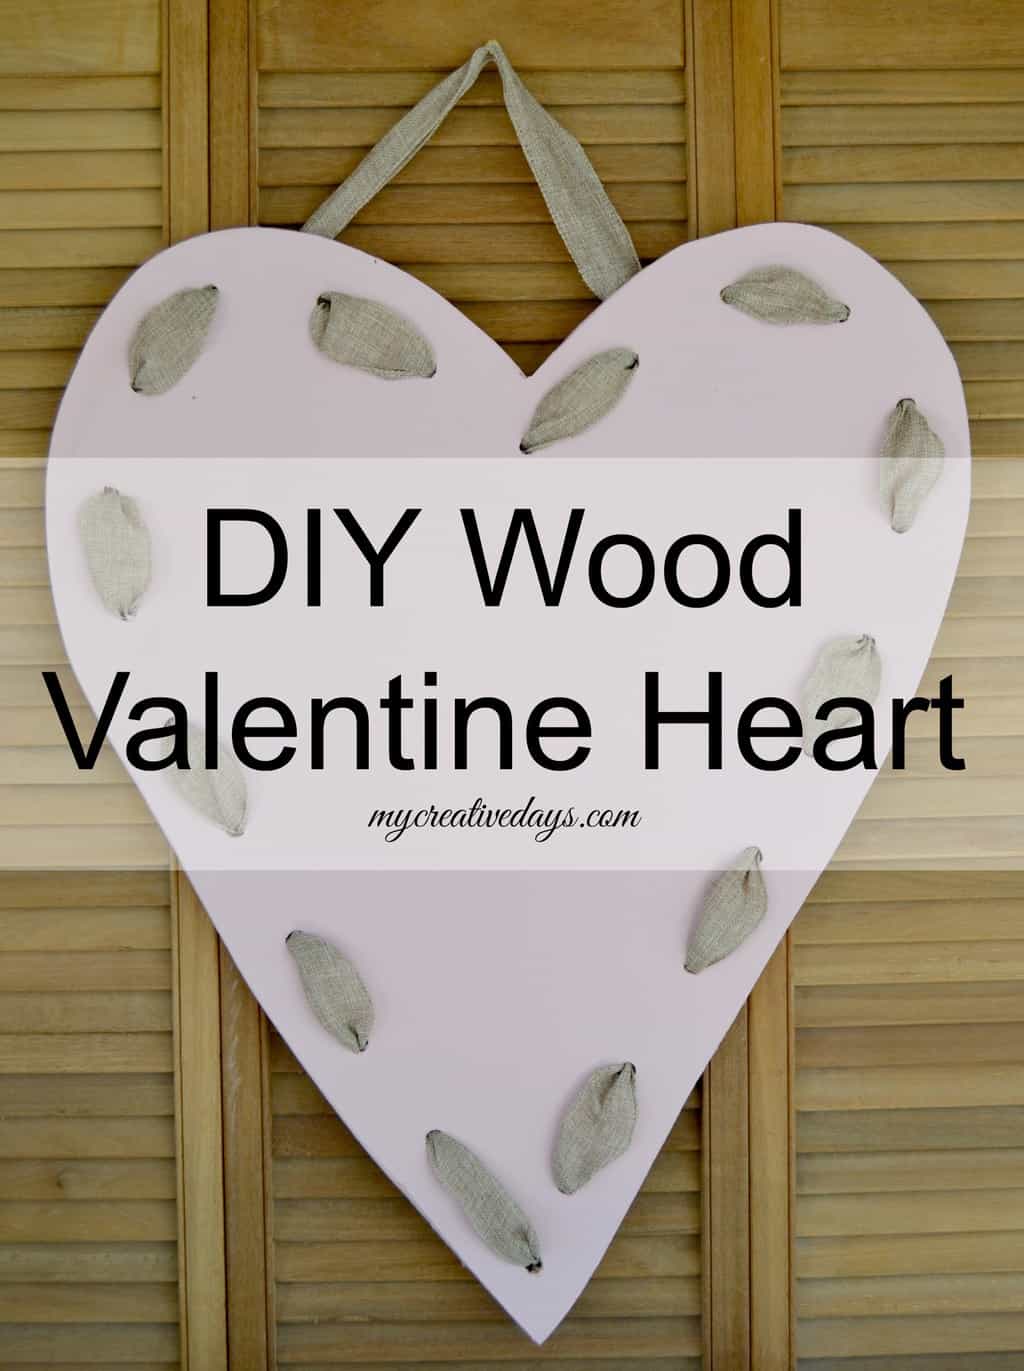 DIY Wood Valentine Heart - My Creative Days